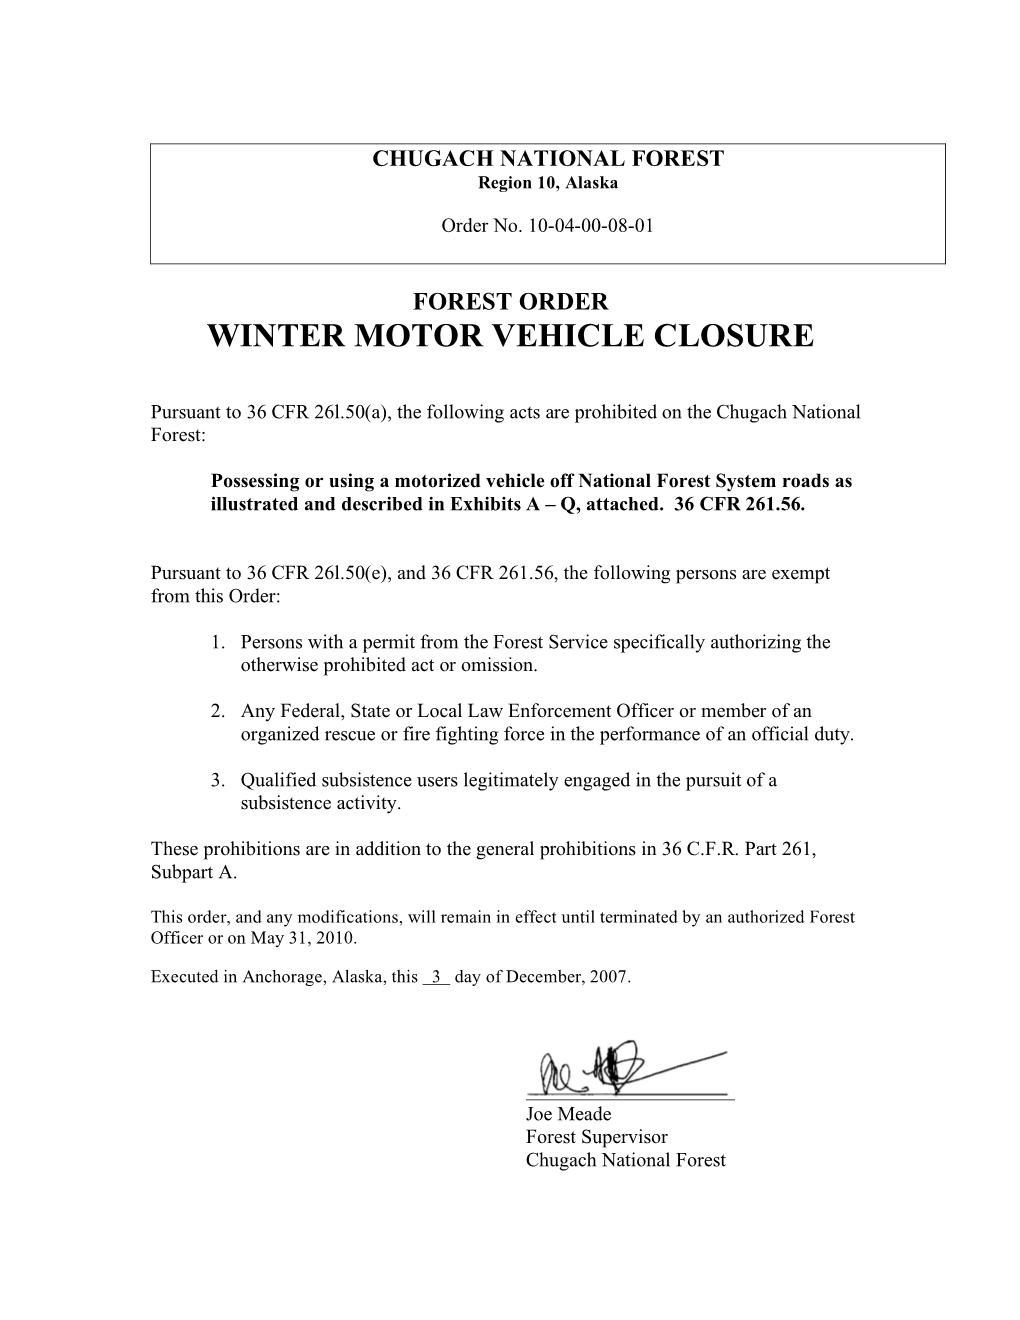 Winter Motor Vehicle Closure